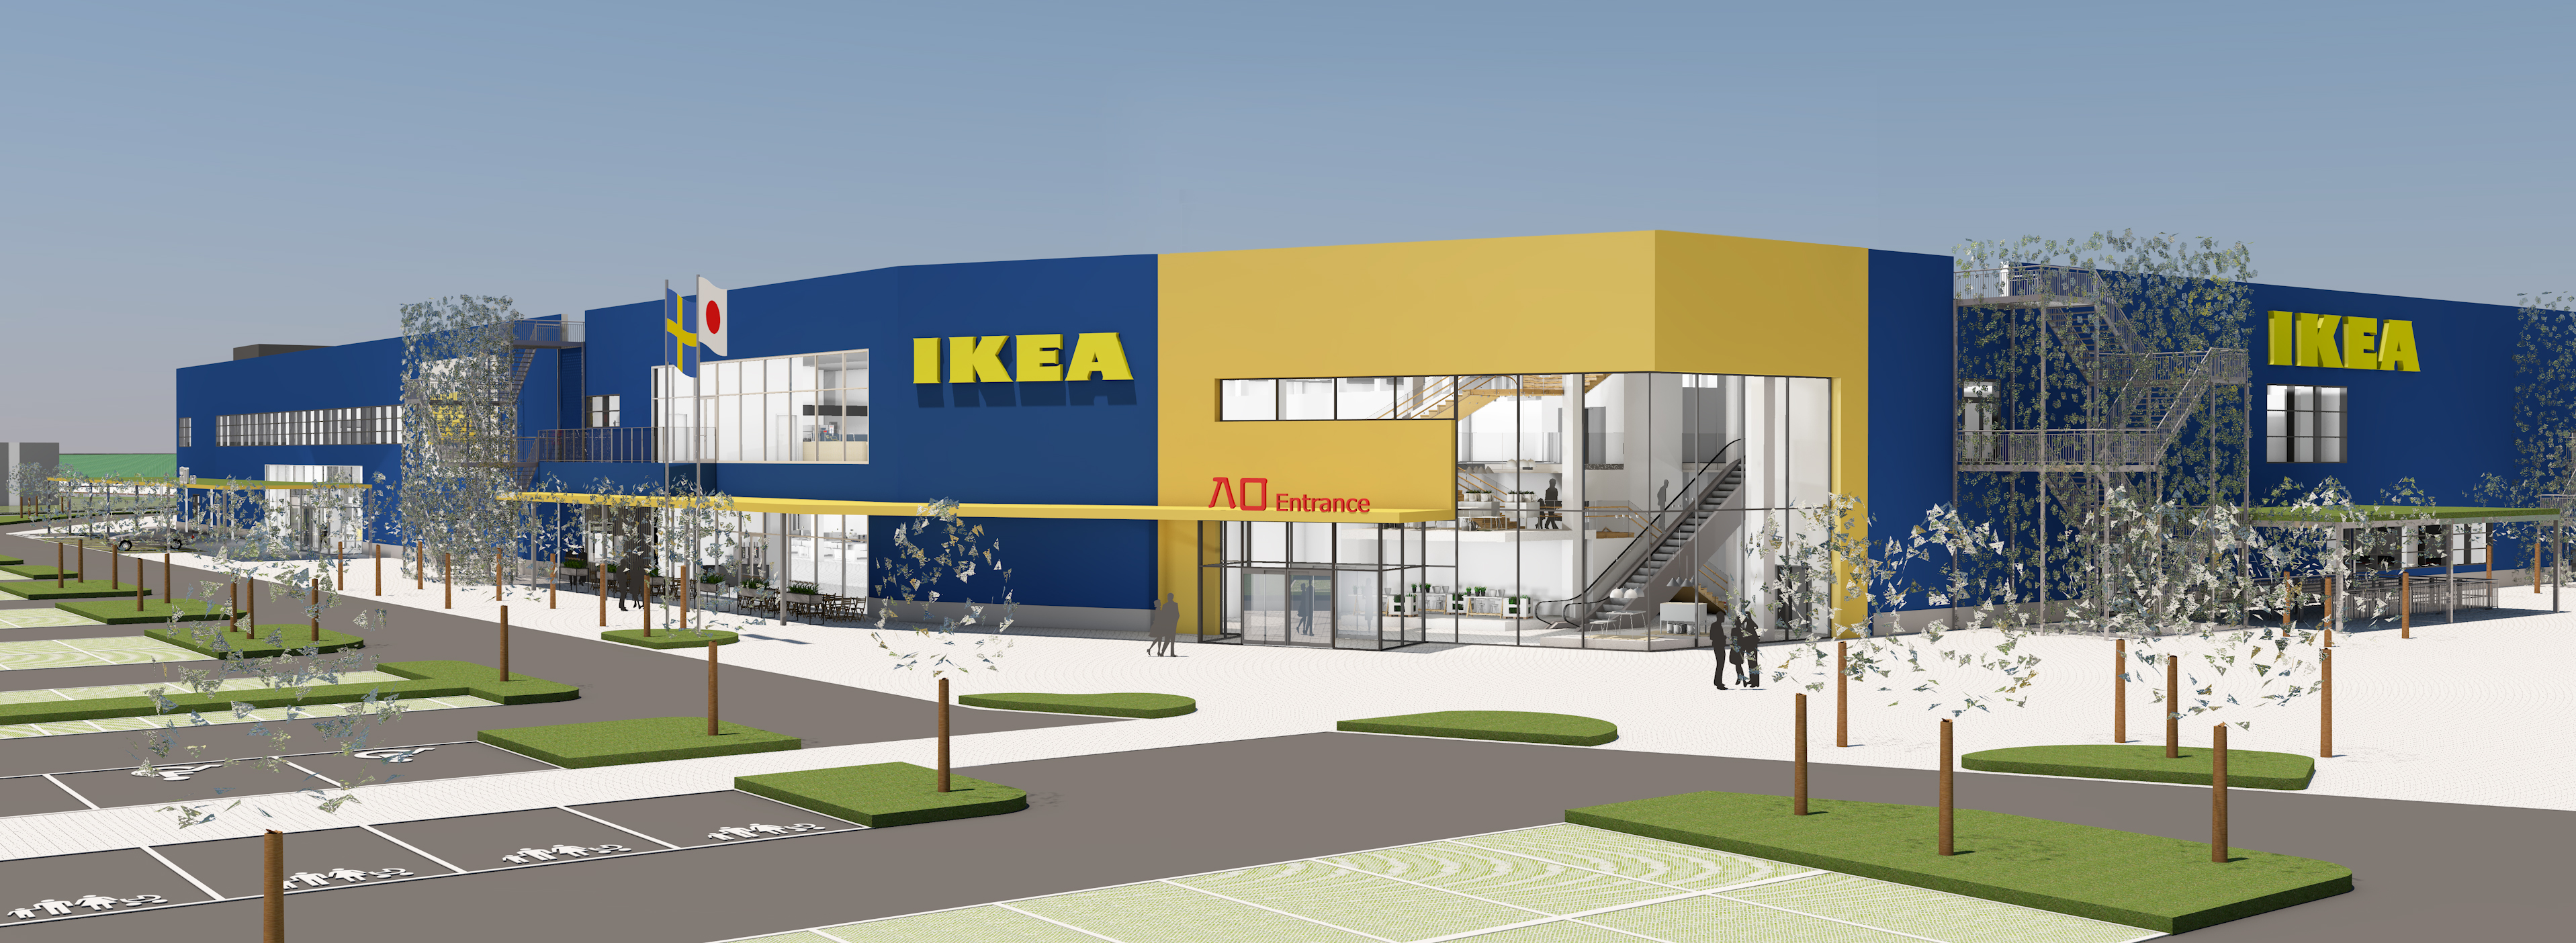 Ikea前橋 仮称 北関東初イケアストアとして24年にオープン予定 イケア ジャパン株式会社のプレスリリース